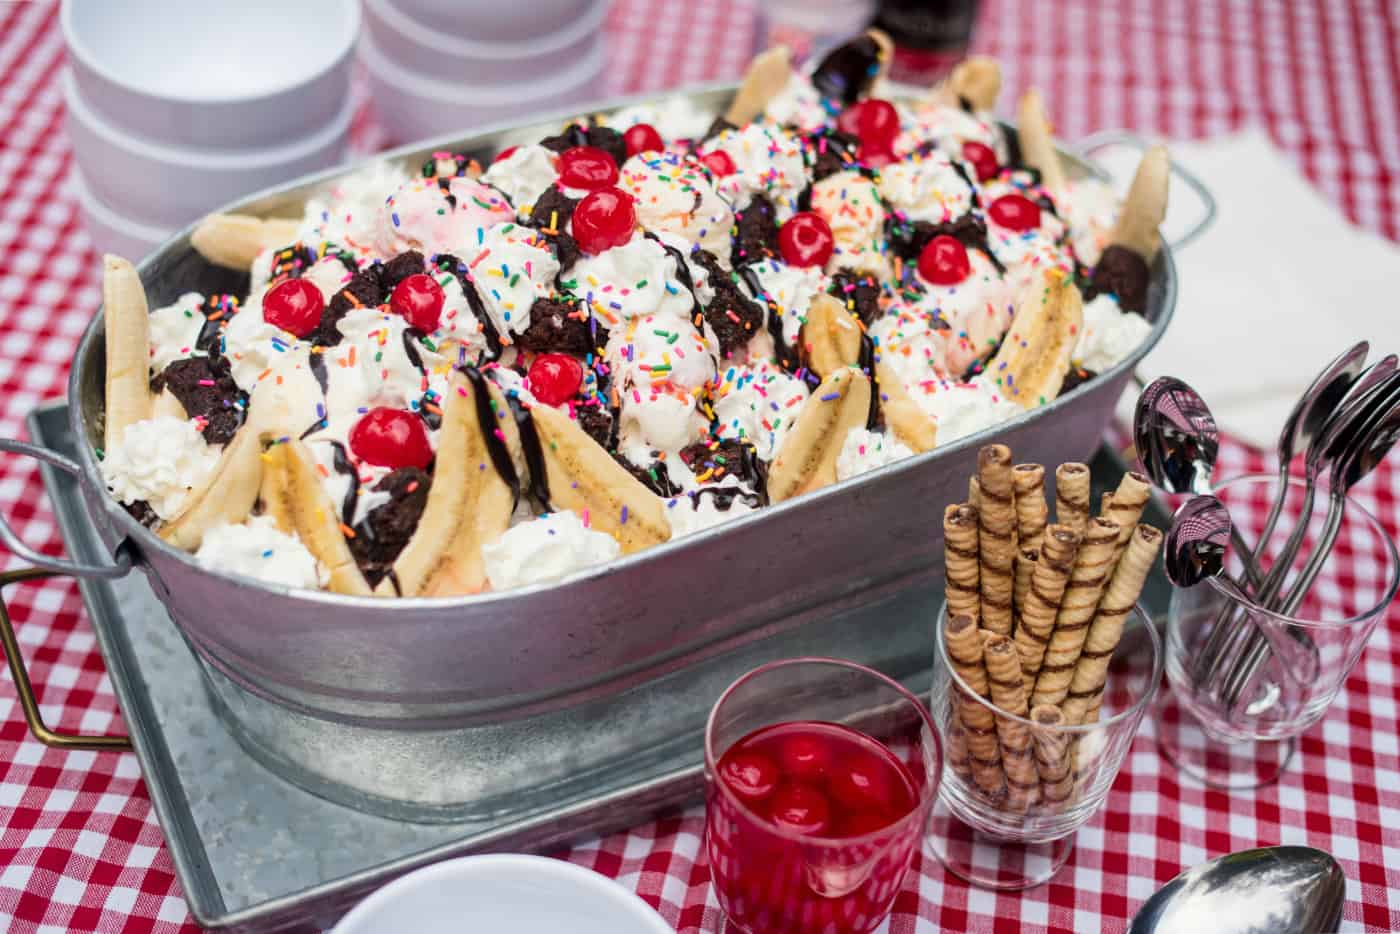 https://reluctantentertainer.com/wp-content/uploads/2013/06/How-to-Make-a-Summer-Ice-Cream-Trough-Dessert-4.jpg